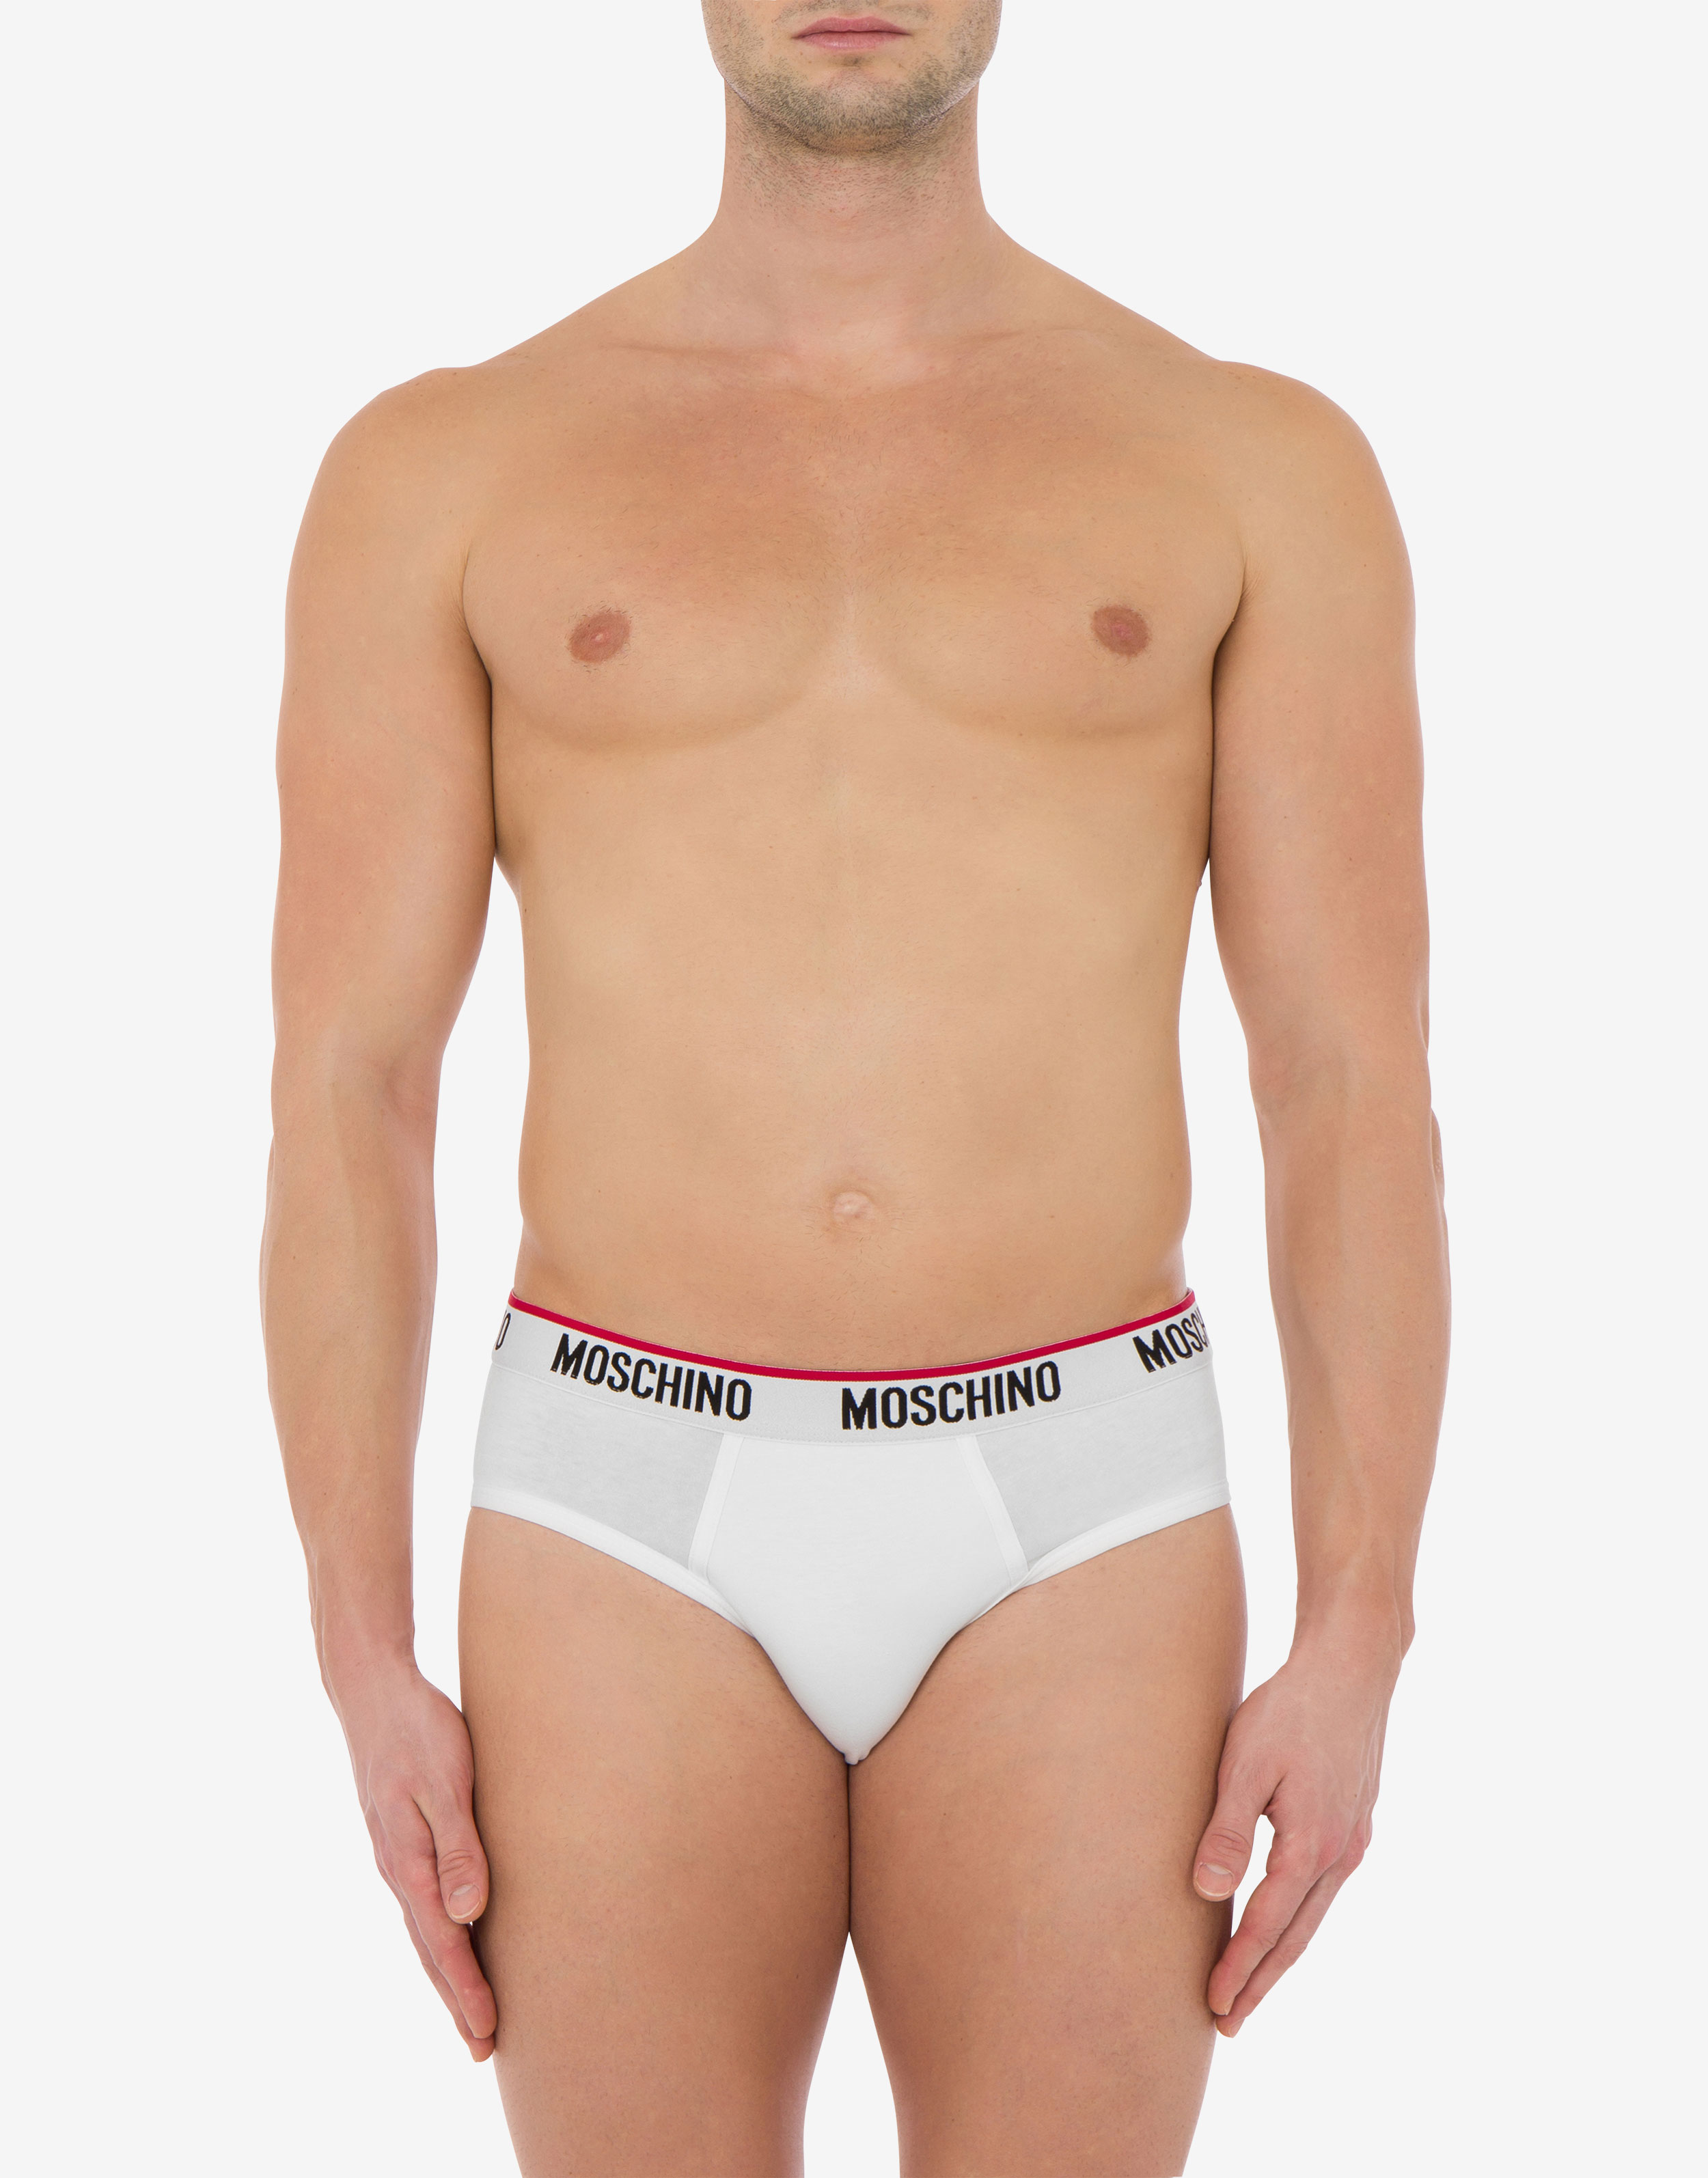 Moschino Underwear Teddy Bear - Briefs for Man - White - V1A138544020001